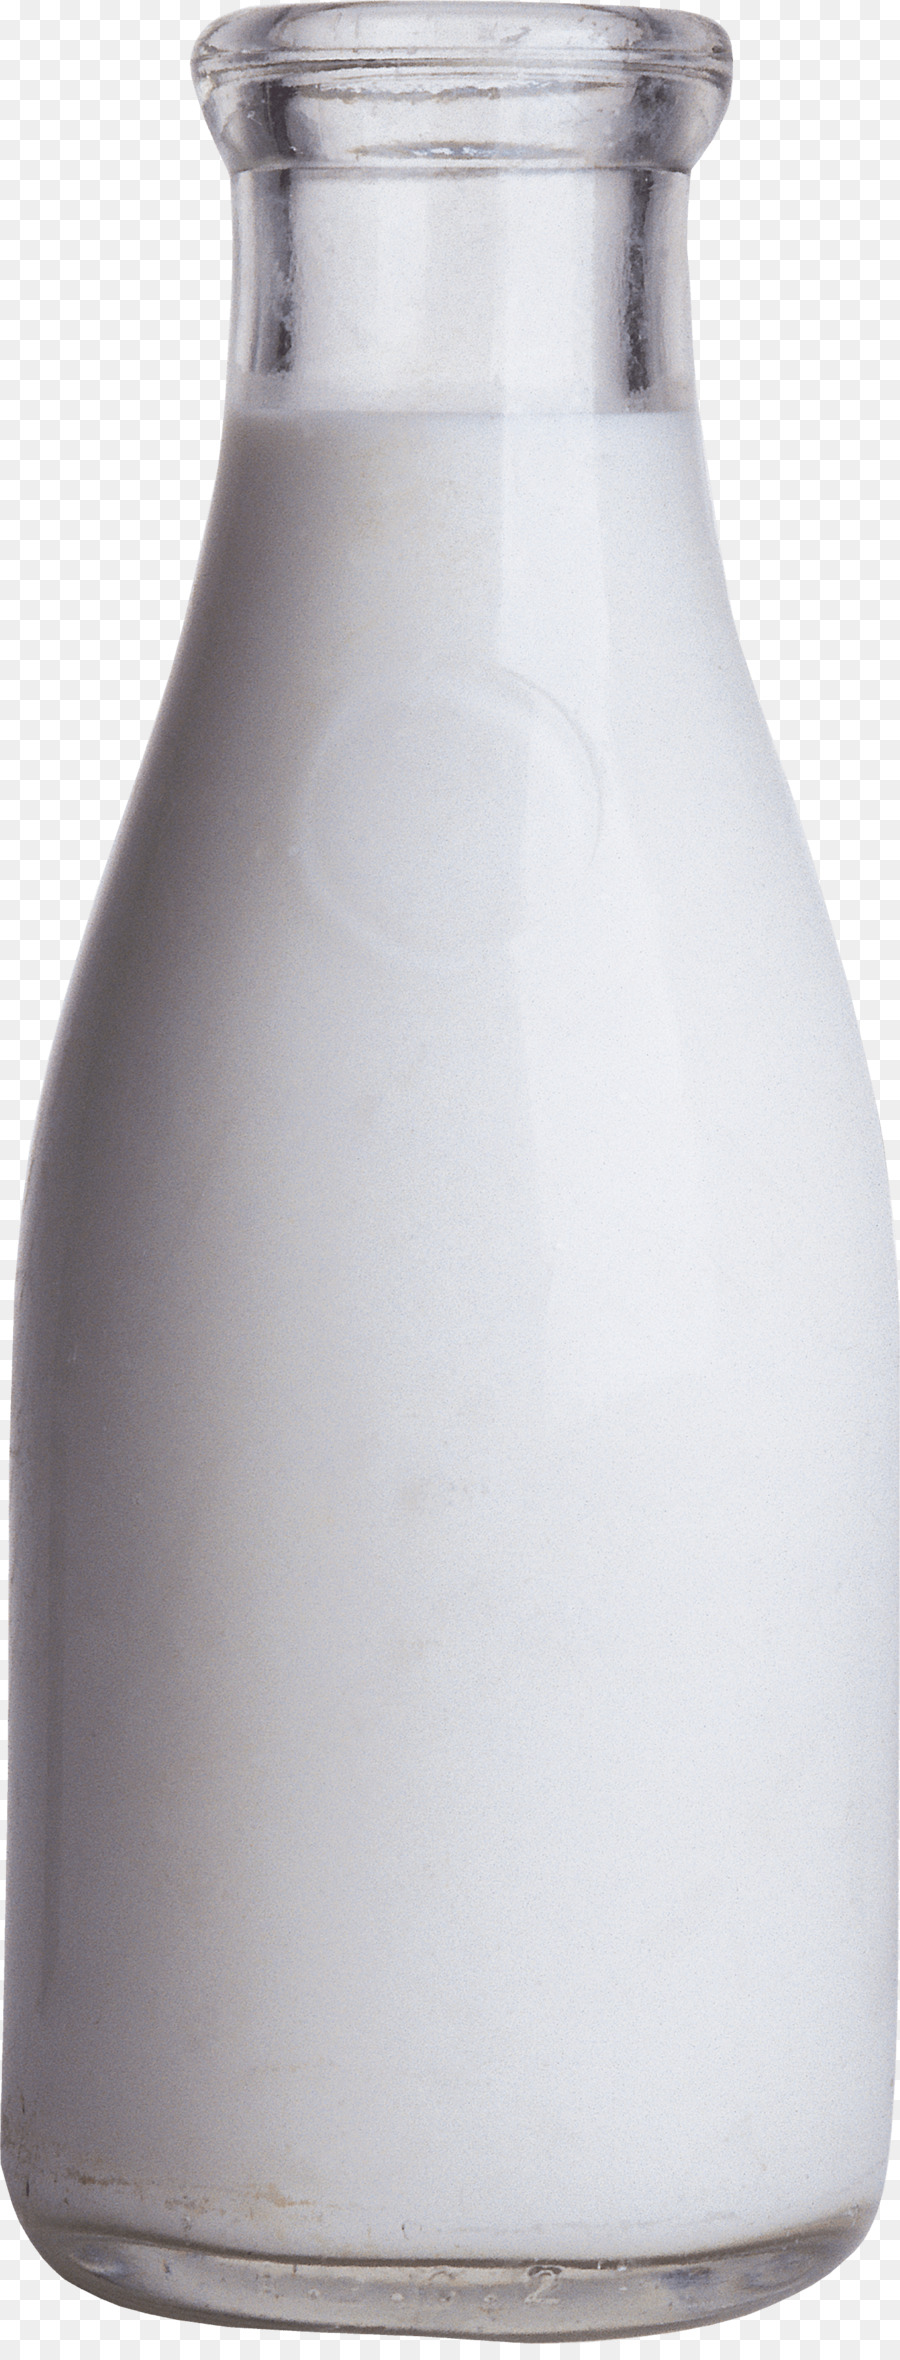 Milch Flasche Clip art - Glasflasche